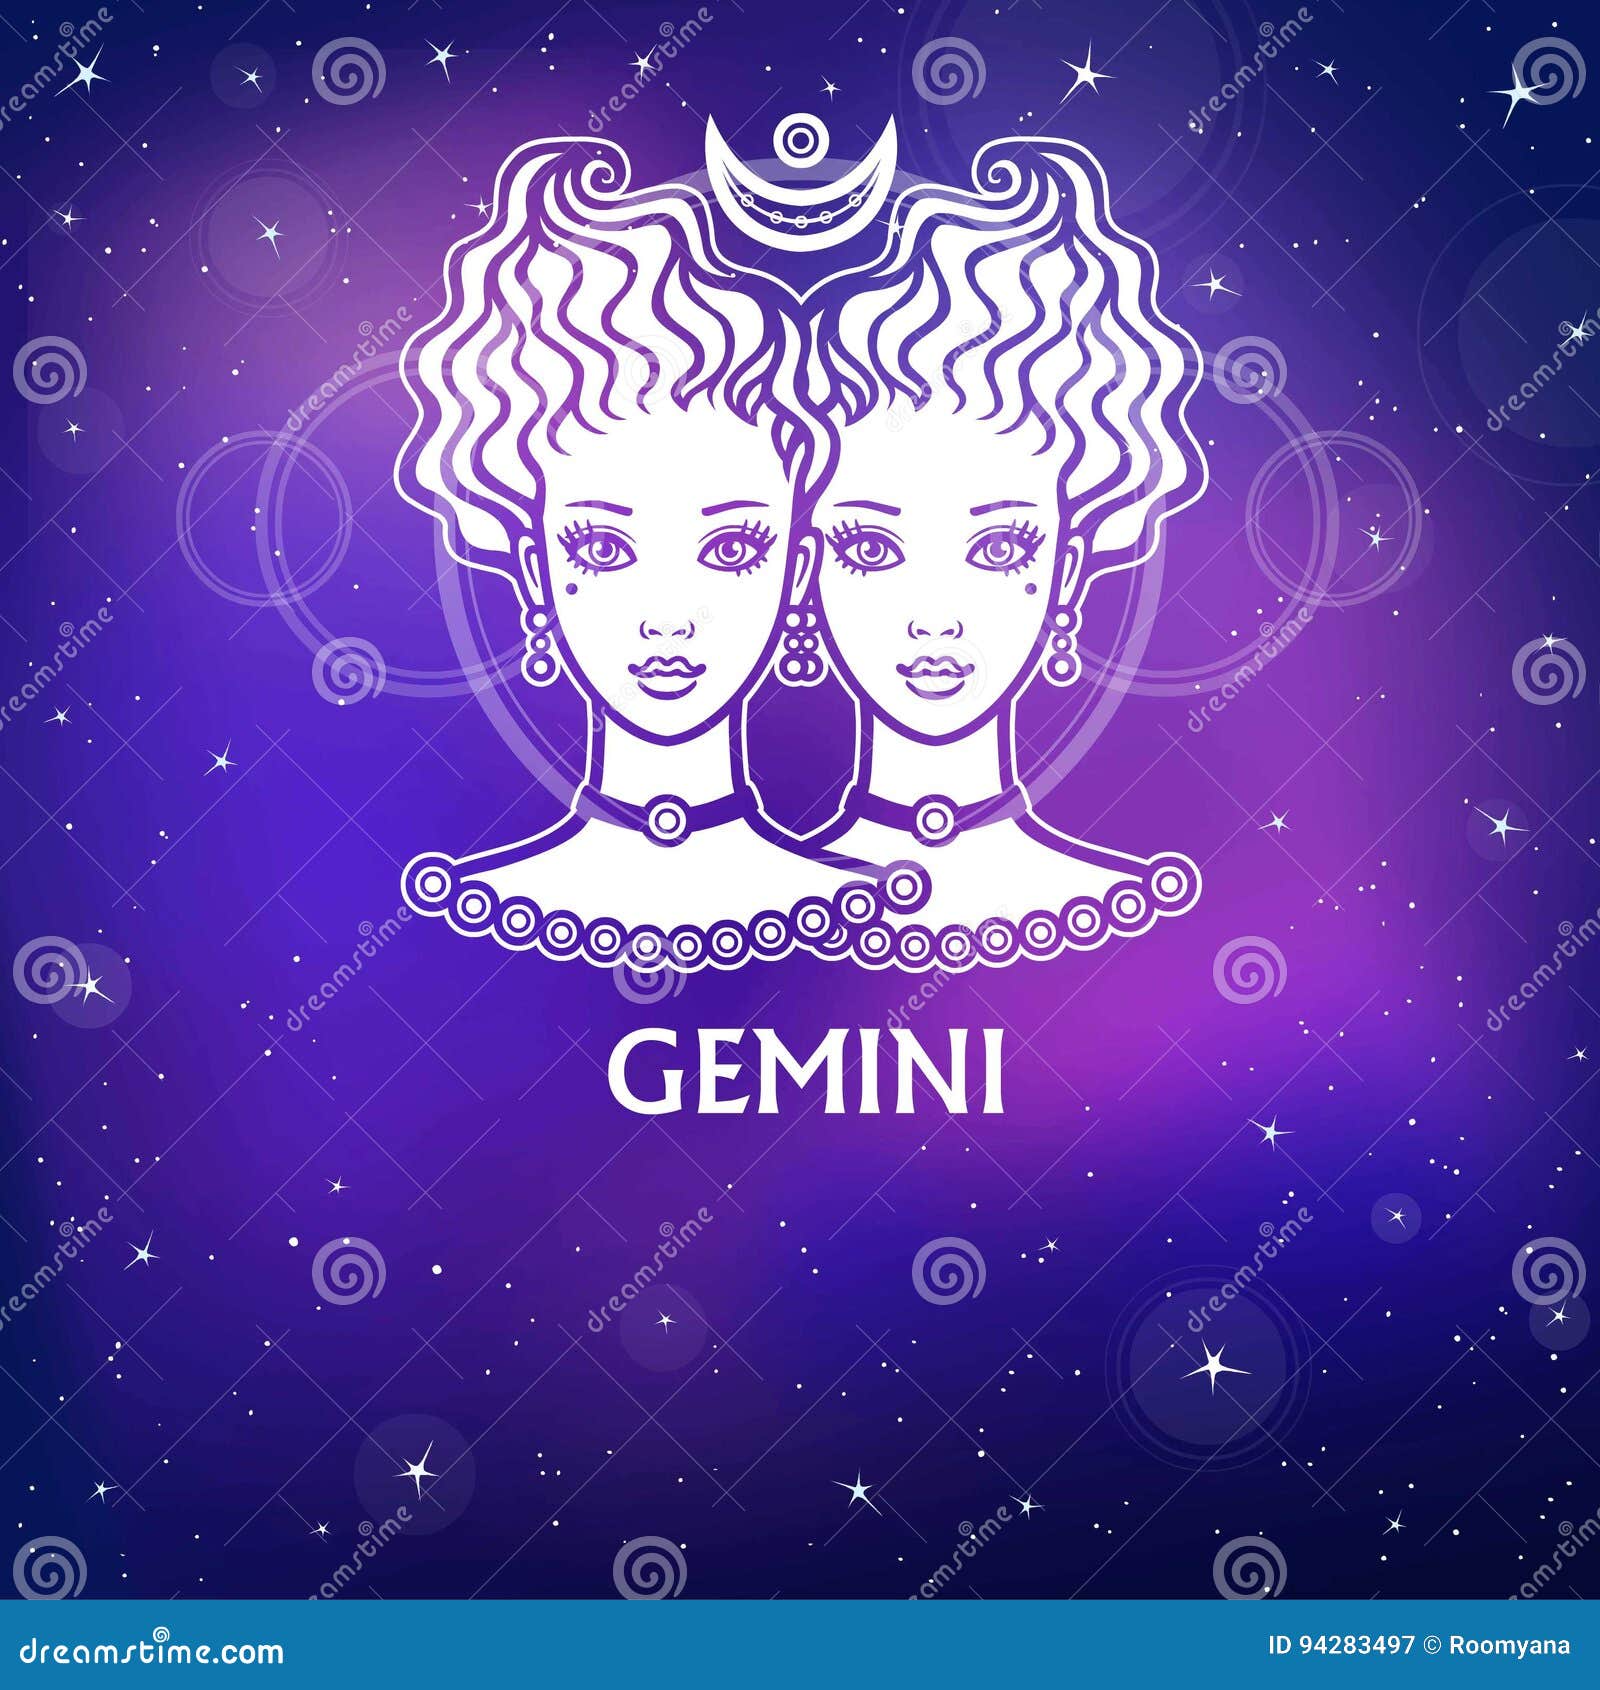 zodiac sign gemini. fantastic princess, animation portrait. white drawing, background - the night stellar sky.